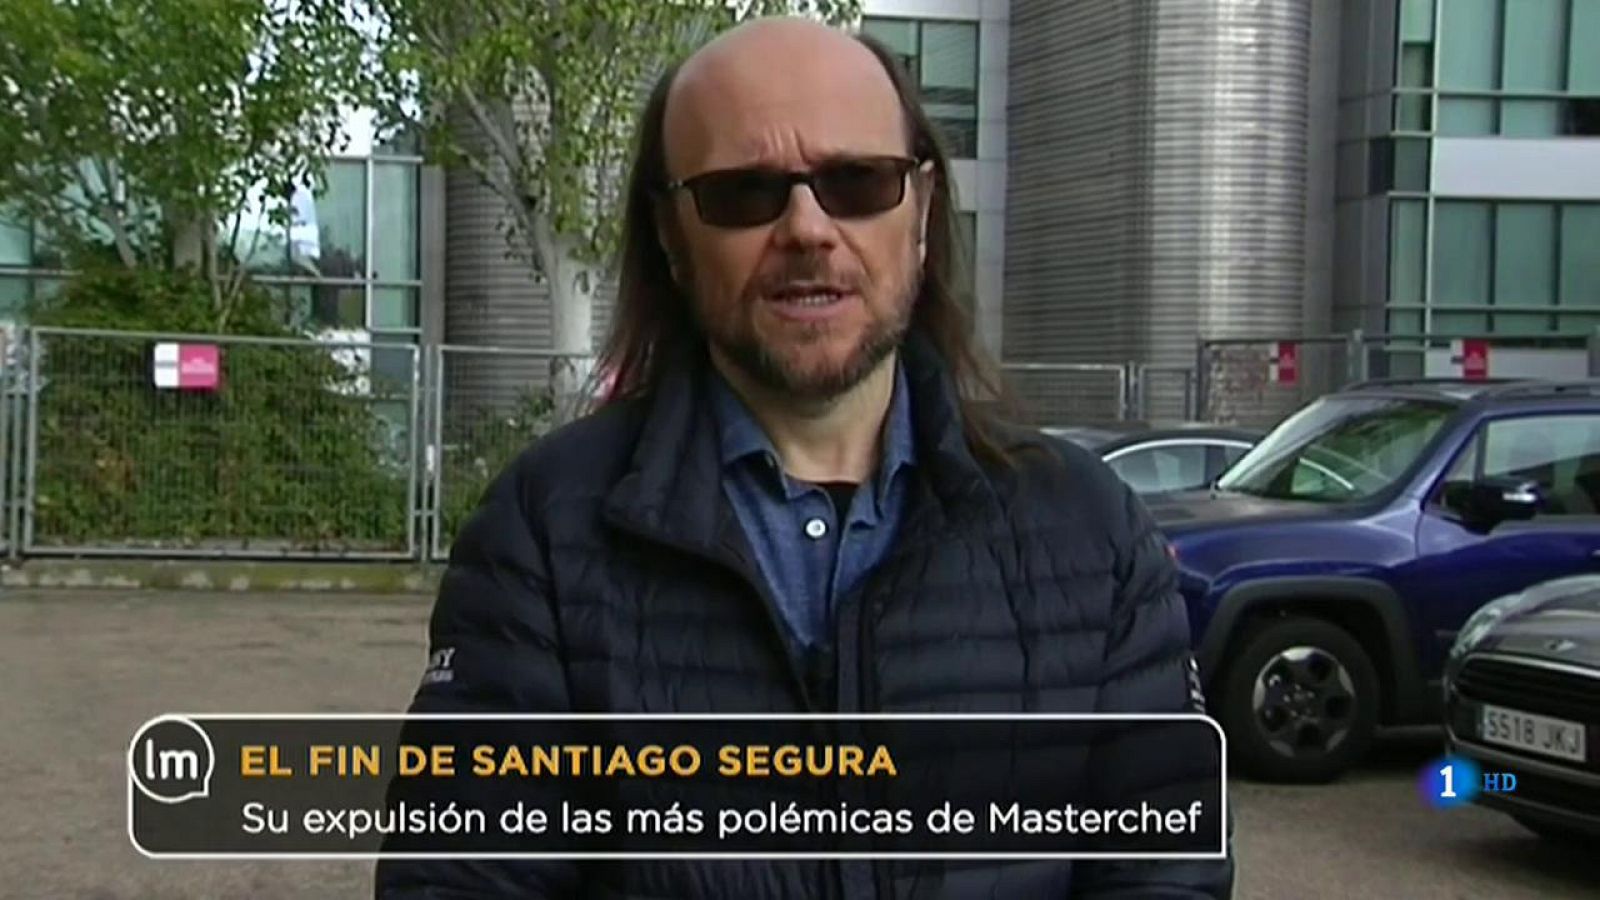 La Mañana - Santiago Segura: "He sido extremadamente competitivo"